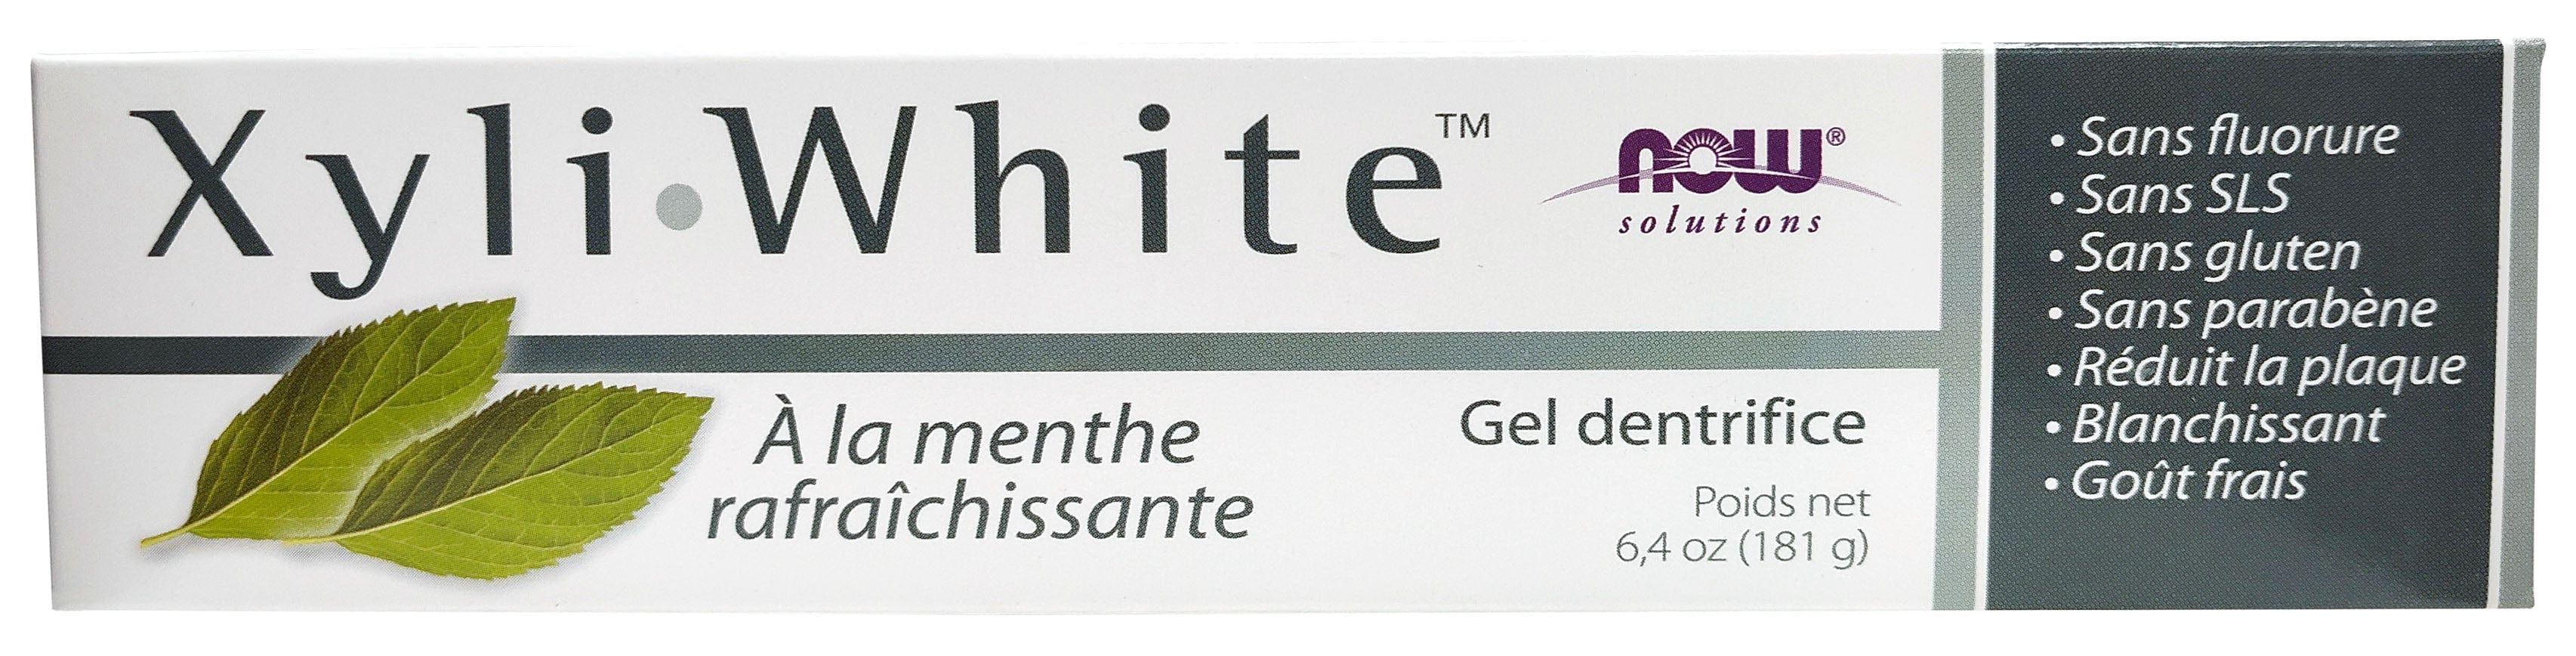 NOW Soins & beauté Gel dentifrice xyliwhite (menthe rafraîchissante)  181g